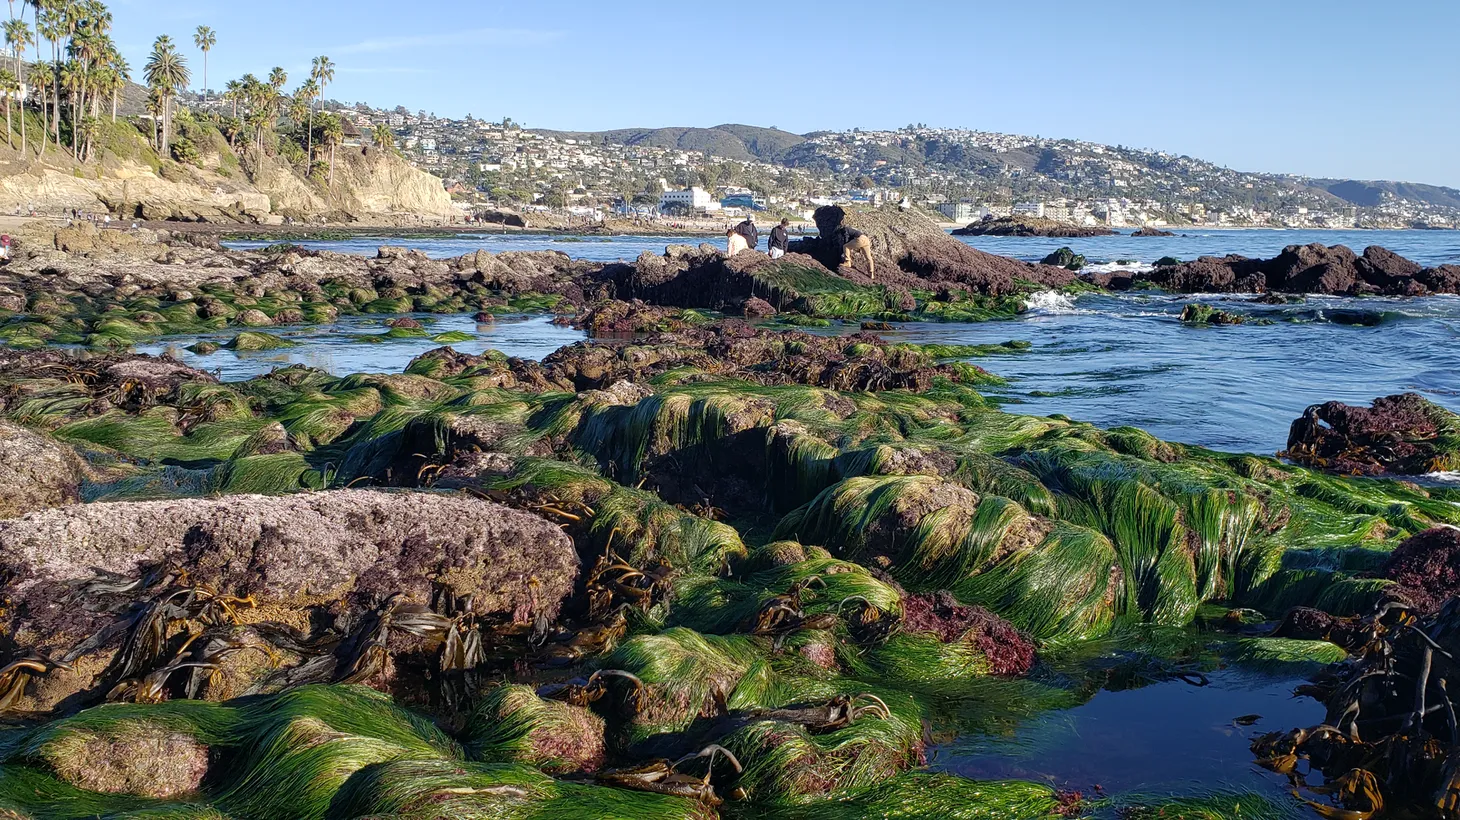 Surfgrass (Phyllospadix) drapes over the rocky intertidal zone in Laguna Beach.